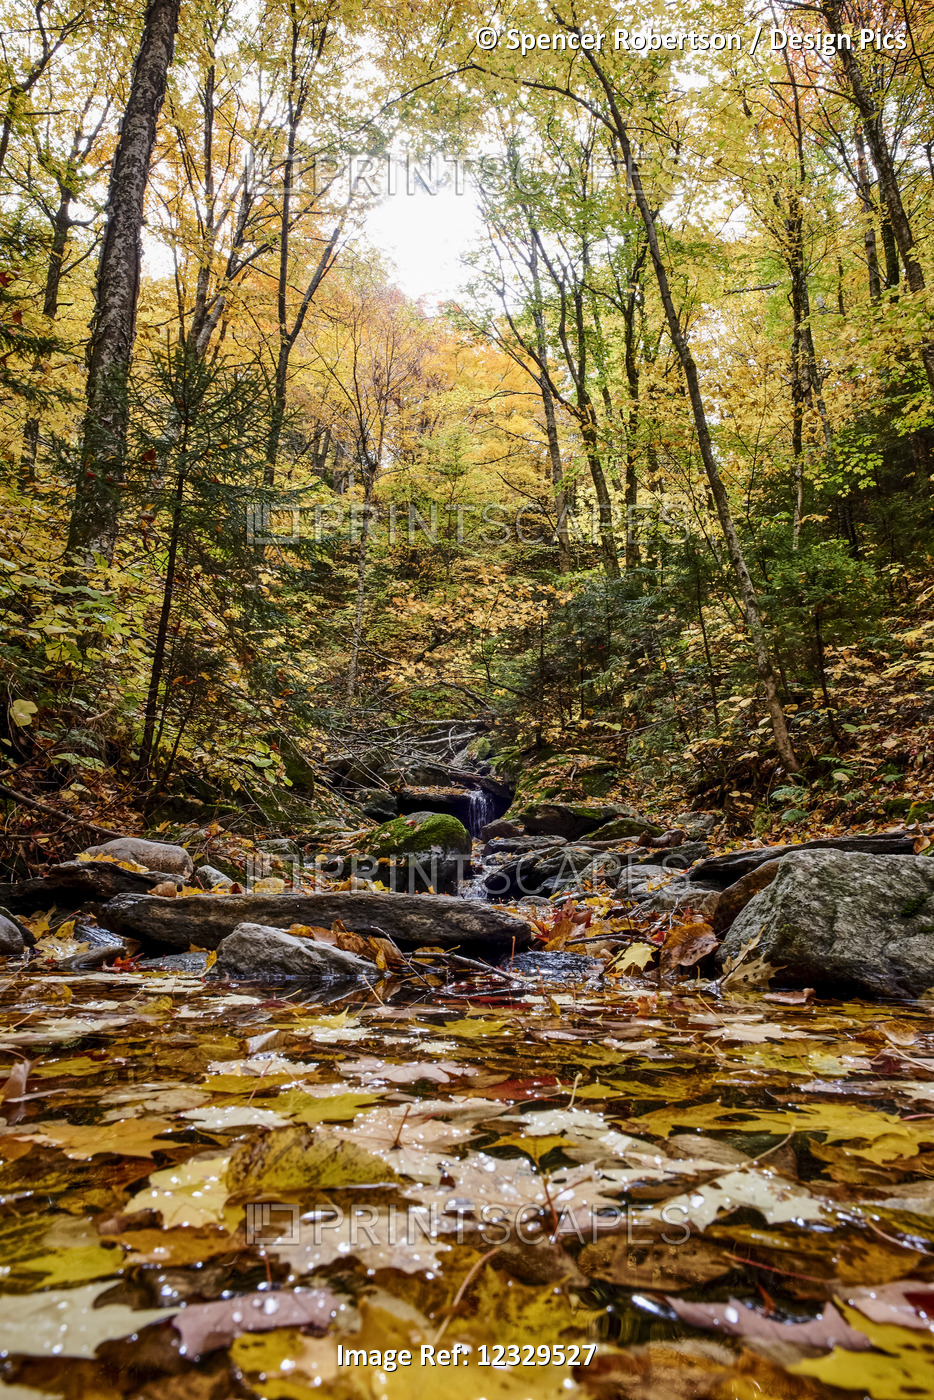 Water Cascades Down A Slope In An Autumn-Coloured Forest; Dunham, Quebec, Canada